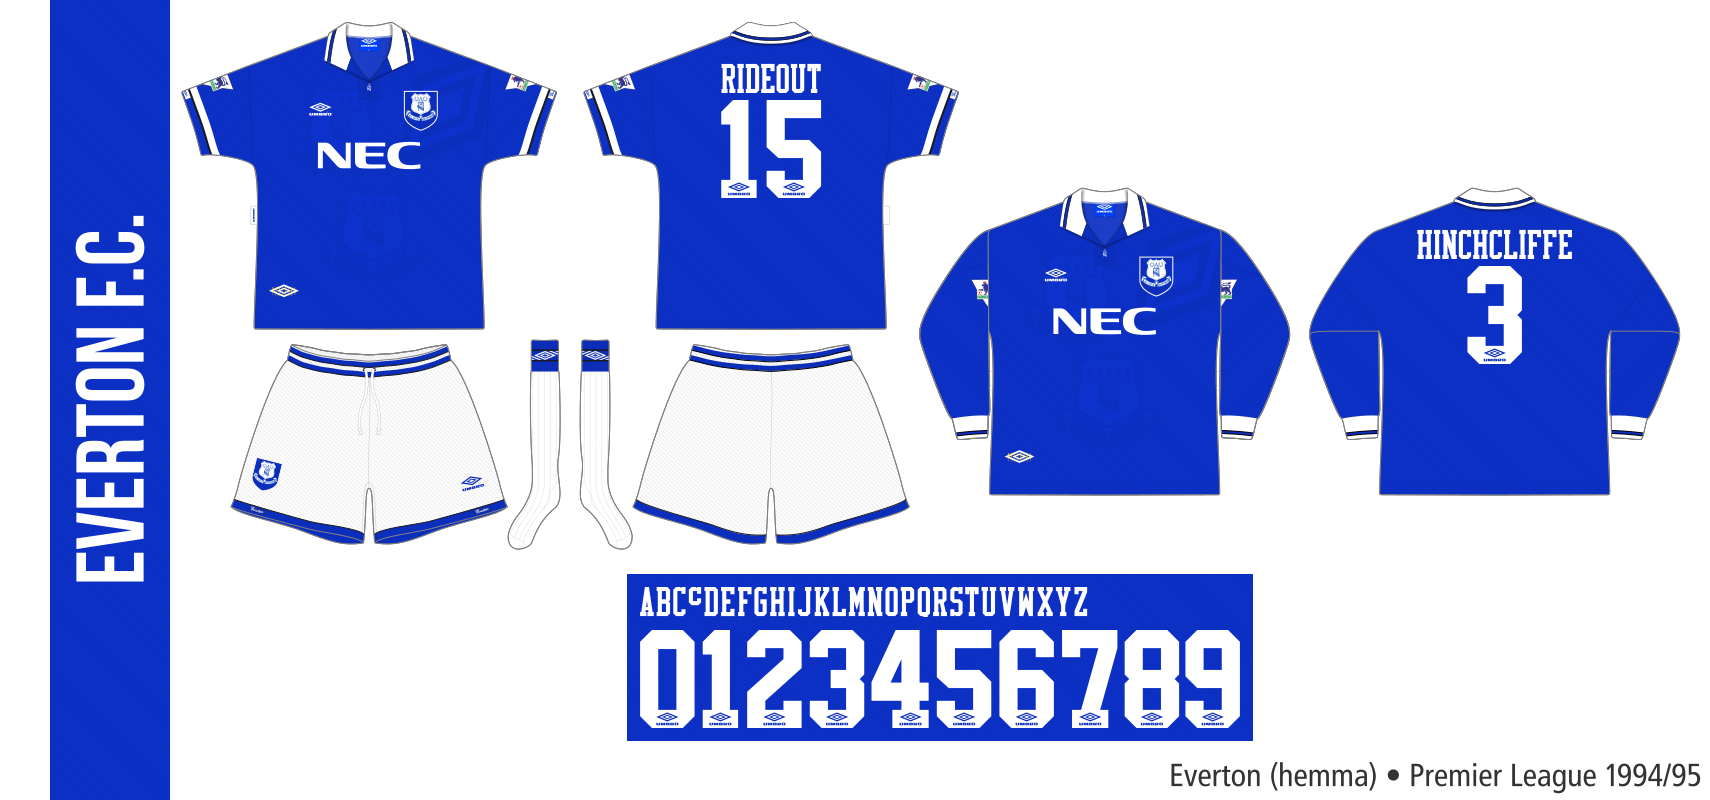 Everton 1994/95 (hemma)